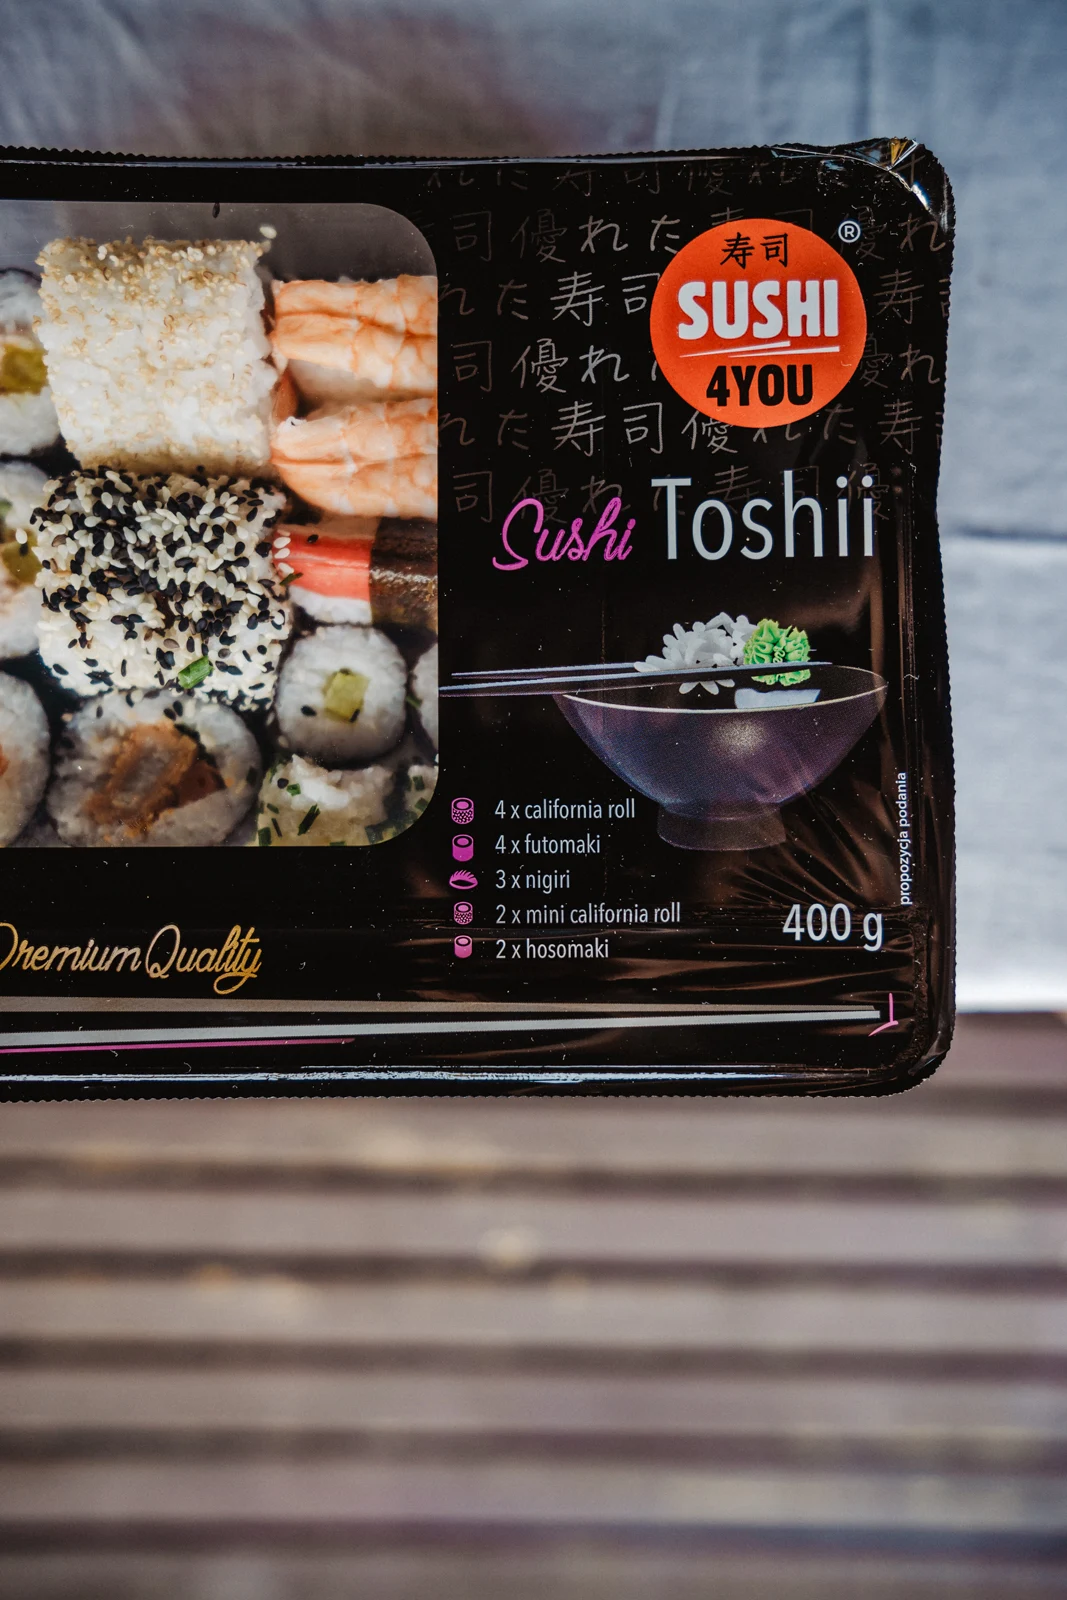 SUSHI 4 YOU - SUSHI TOSHII  - testujemy sushi z Biedronki